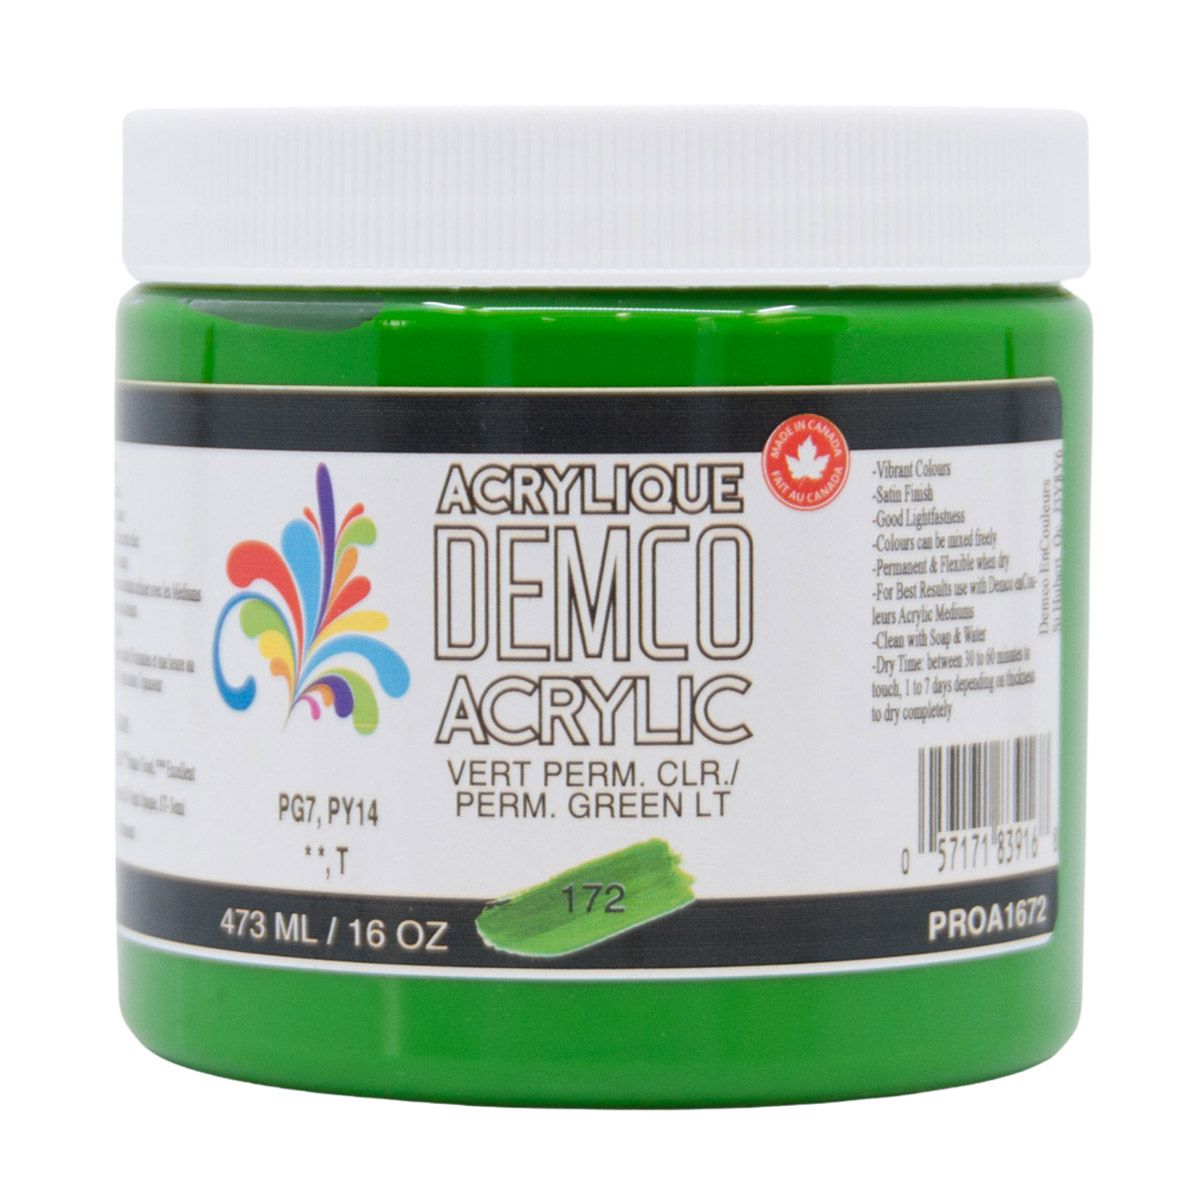 Demco Acrylic Permanent Green Light Hue 473ml/16oz